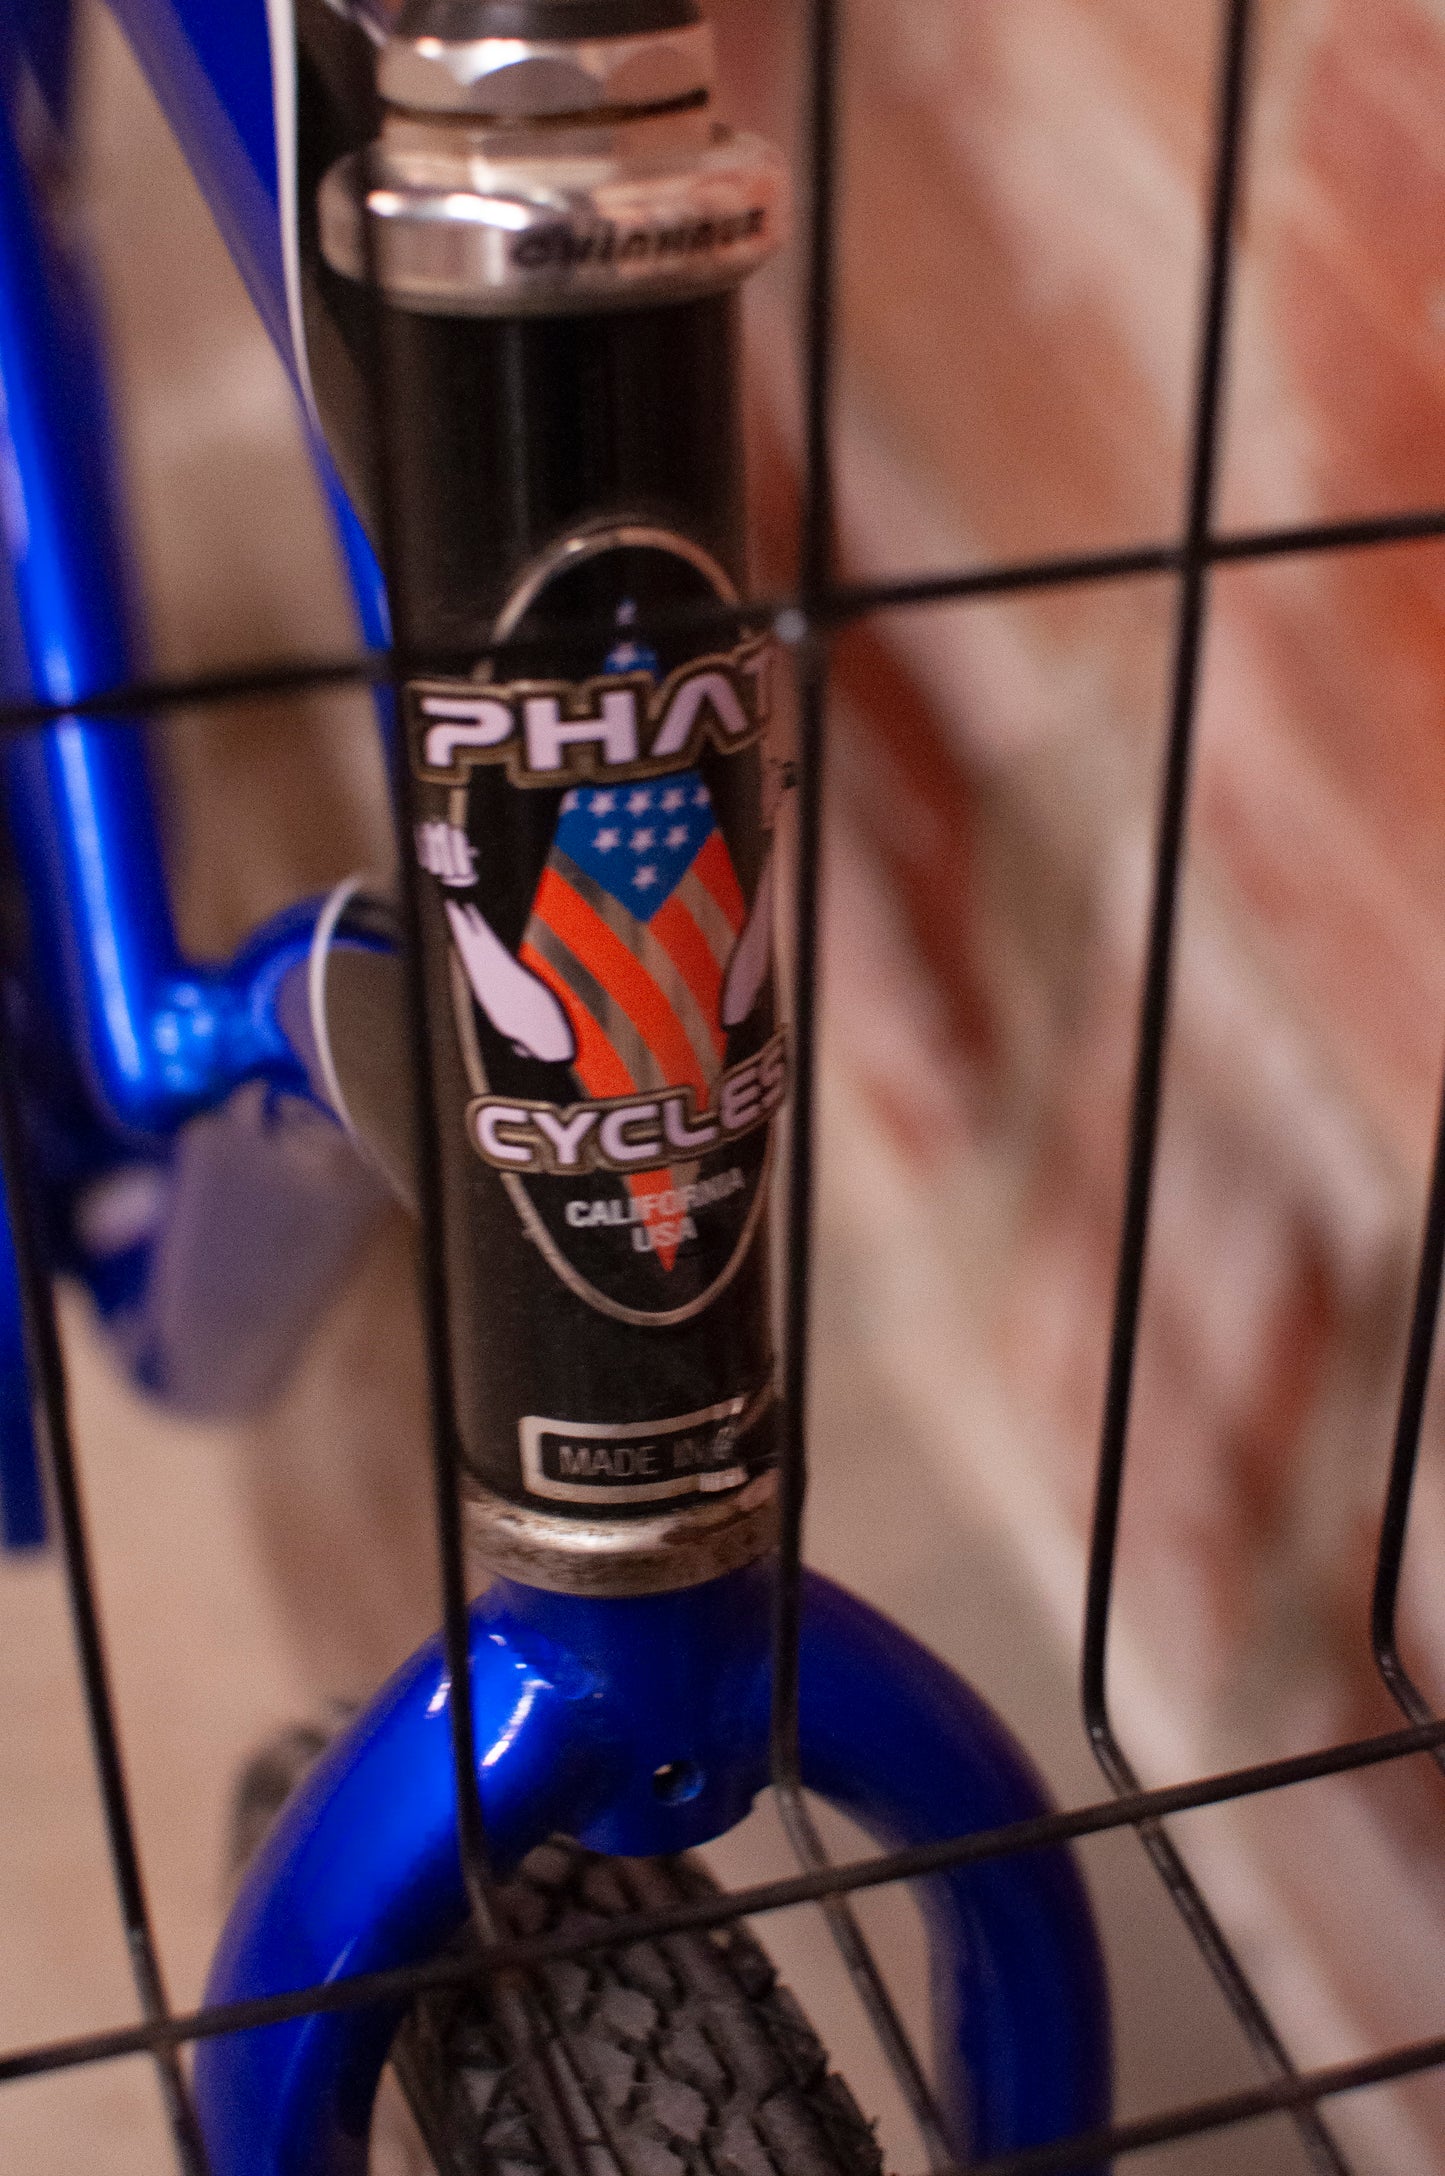 Phat Cycles blue cruiser bike, fixed gear, blue & black 46cm/Medium frame